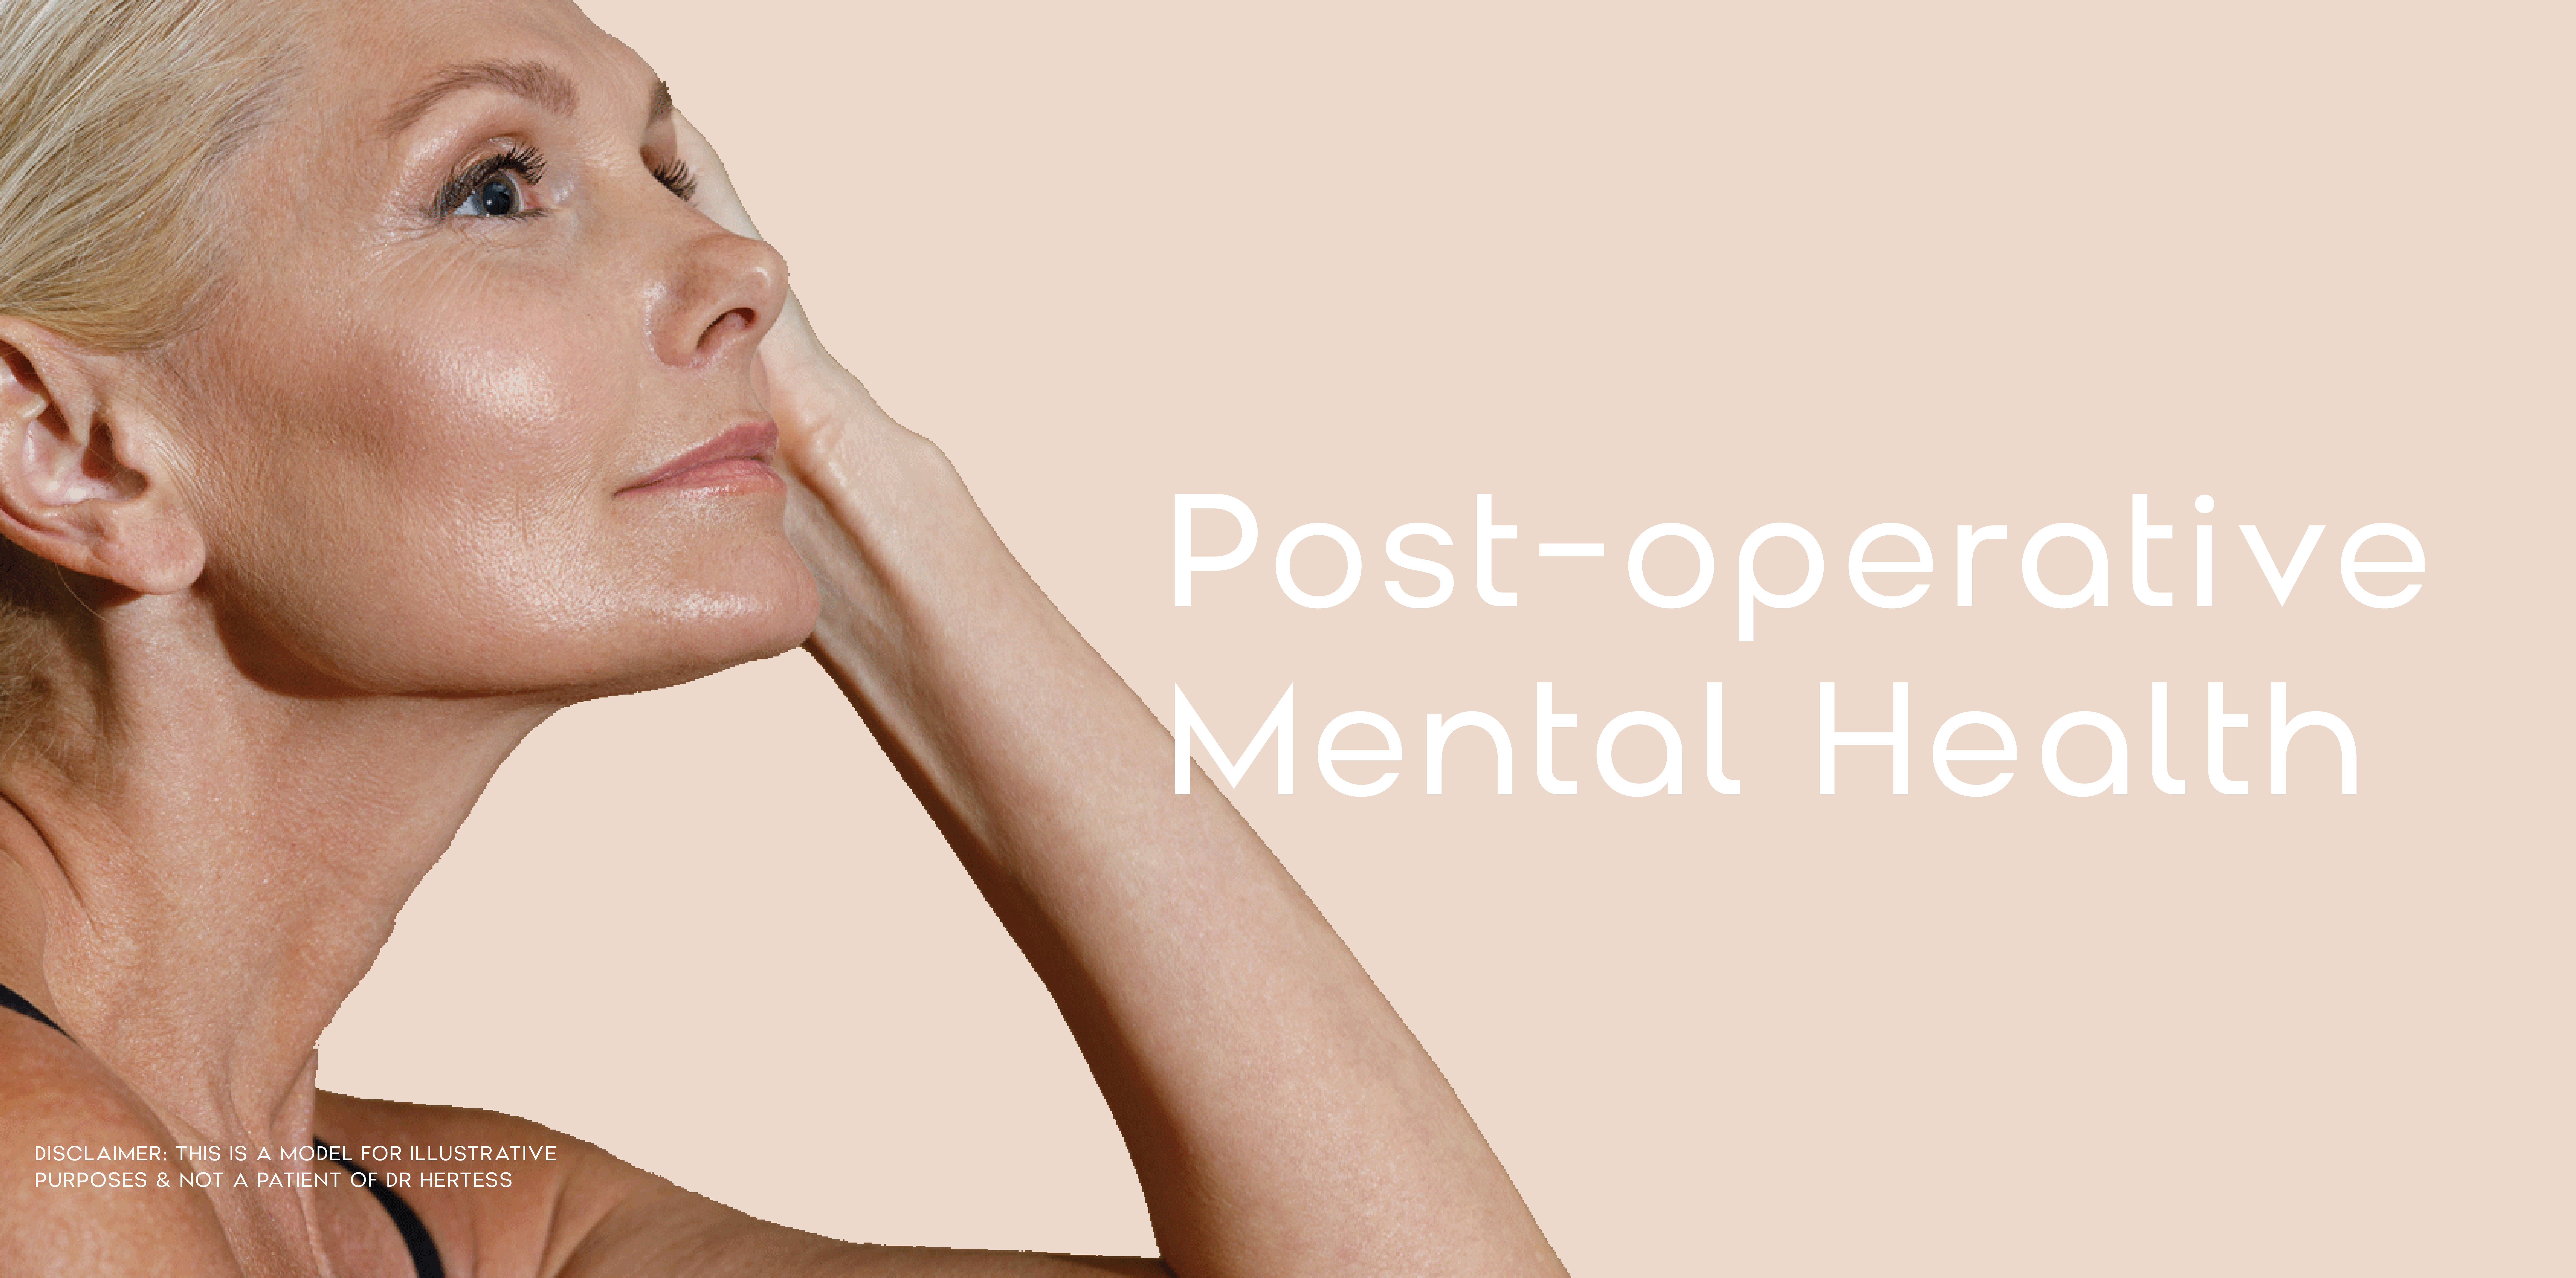 Post-operative mental health